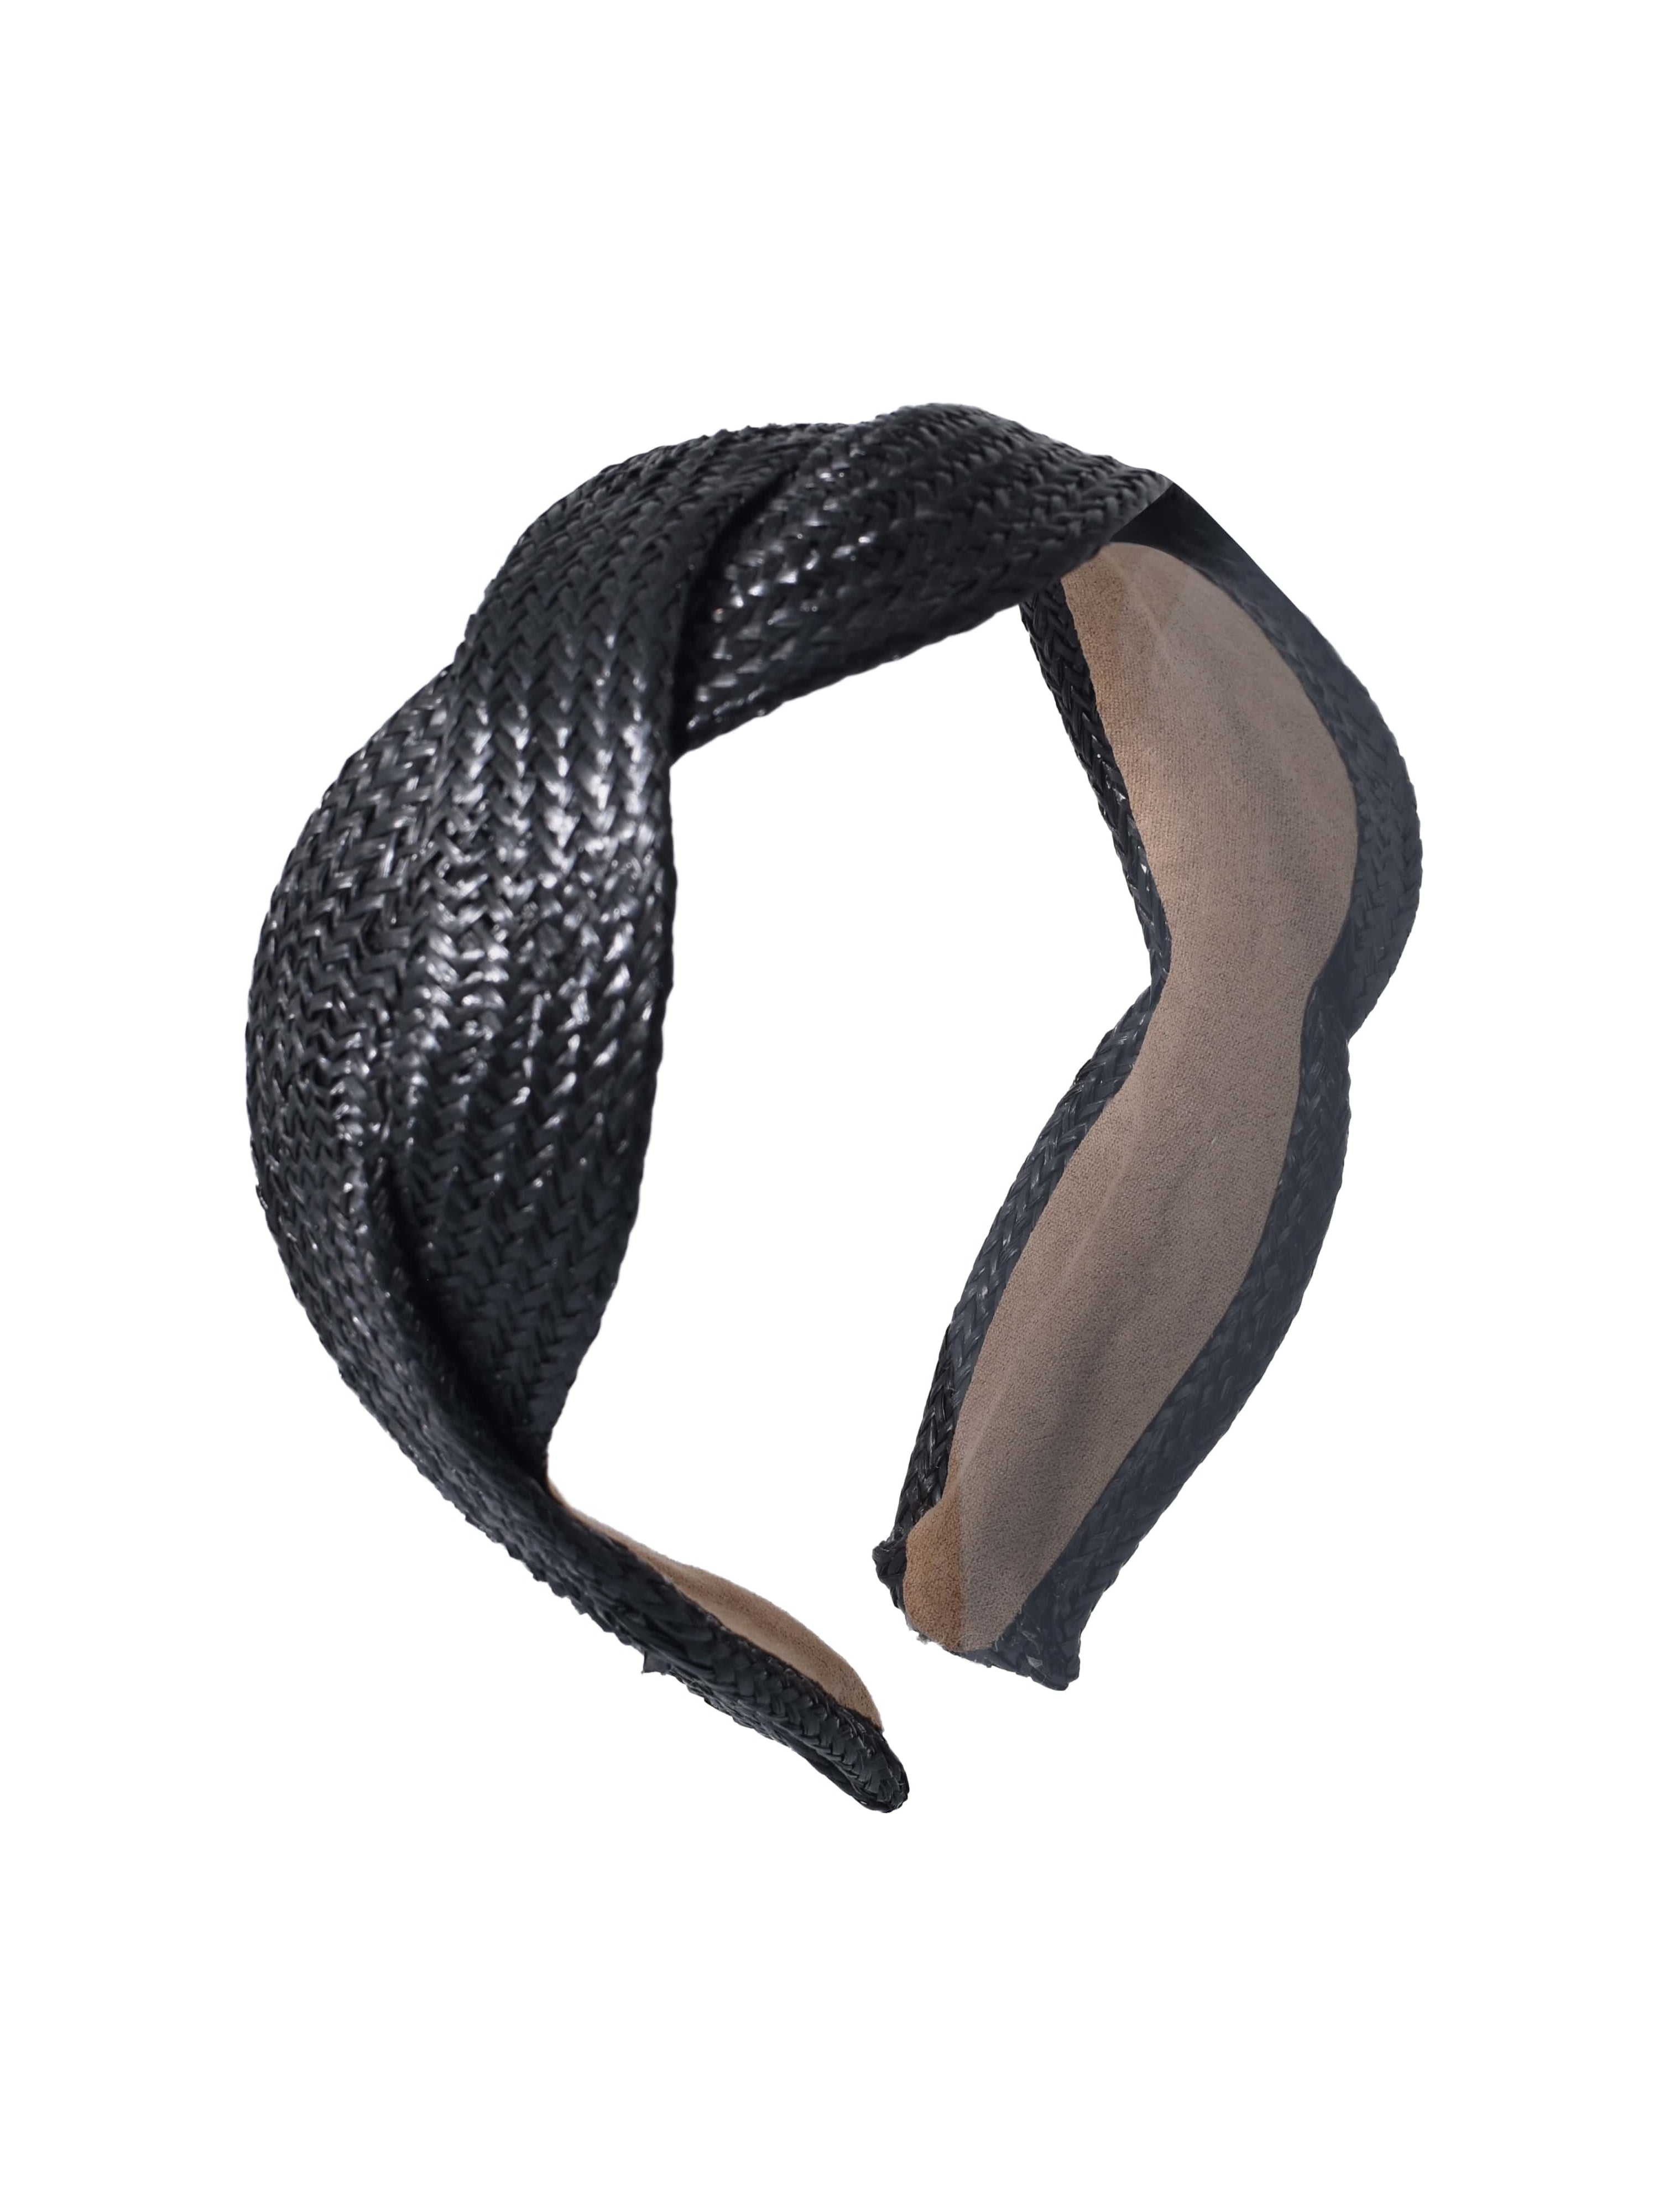 Braided Headband in Black